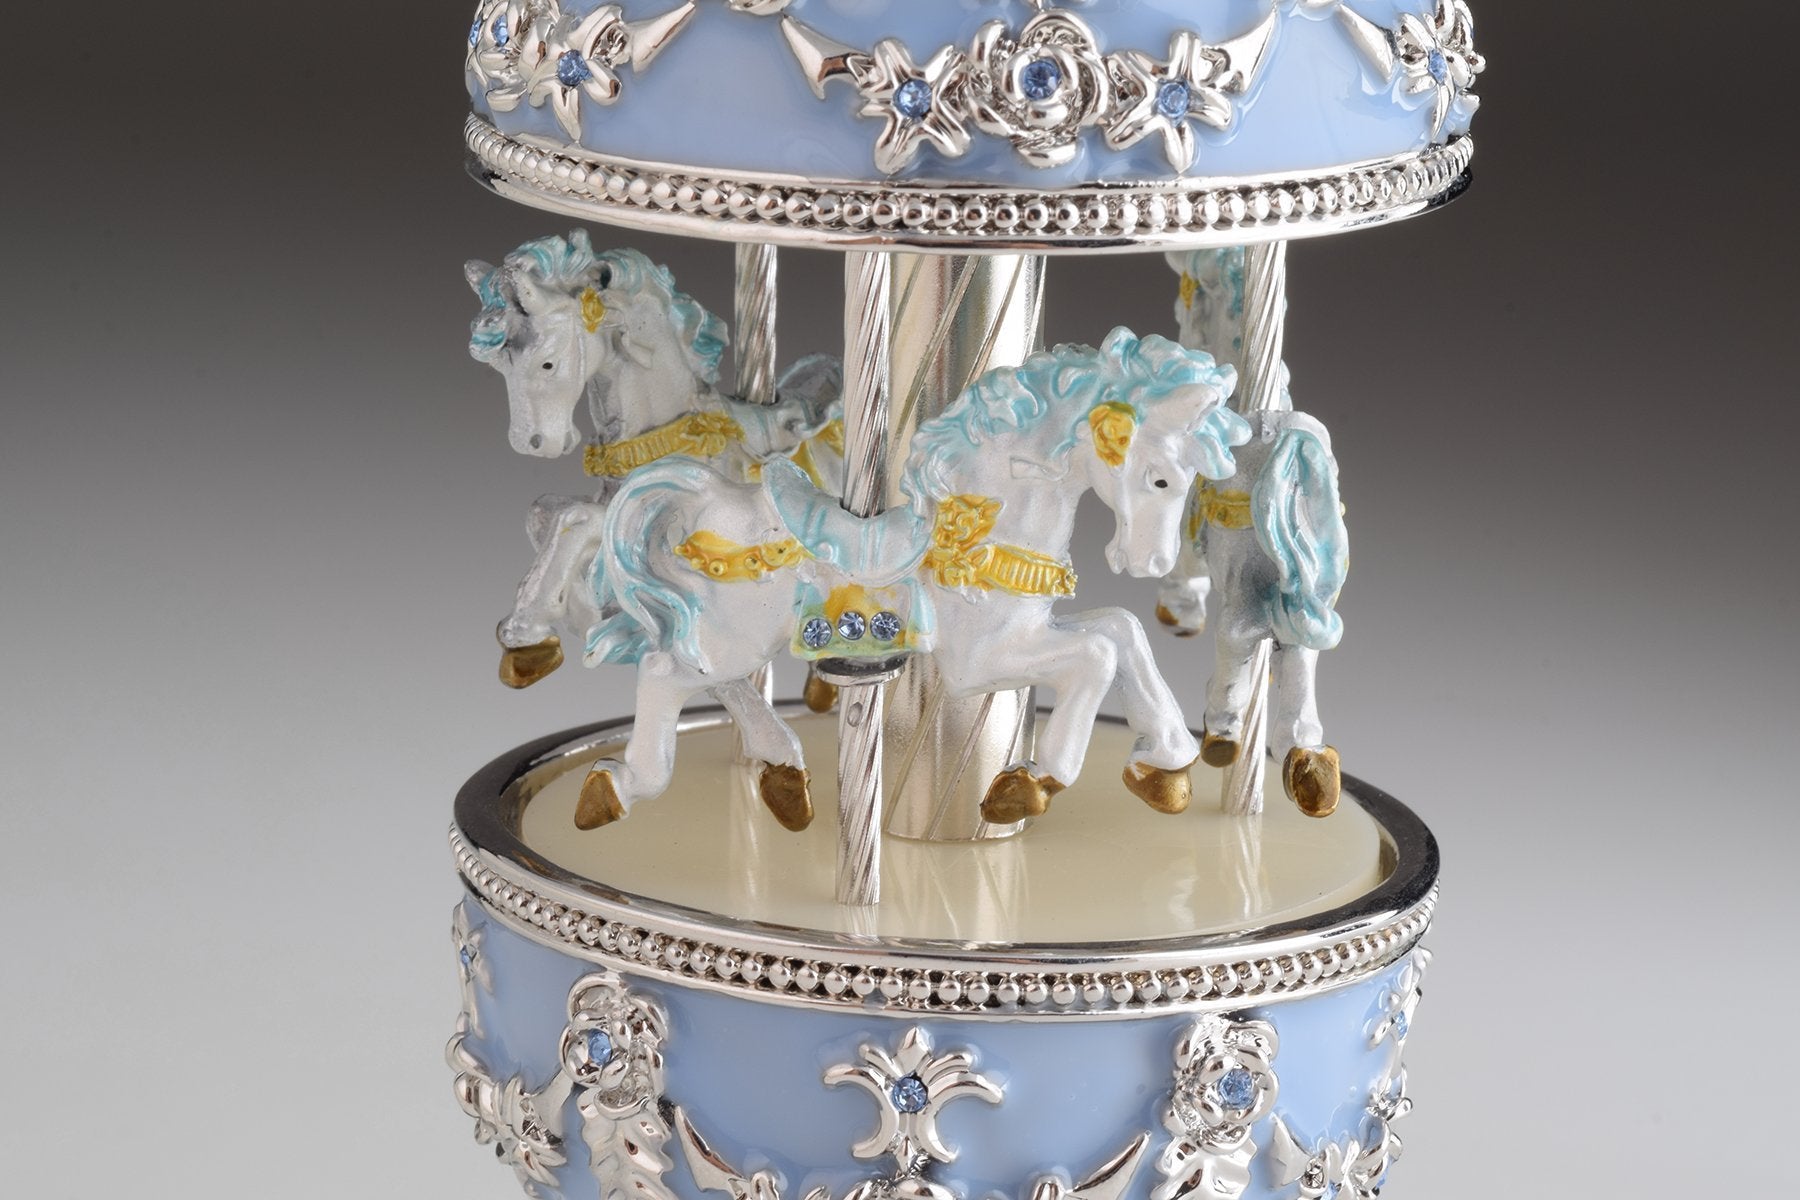 Keren Kopal Light Blue Musical Carousel Faberge Egg  124.00